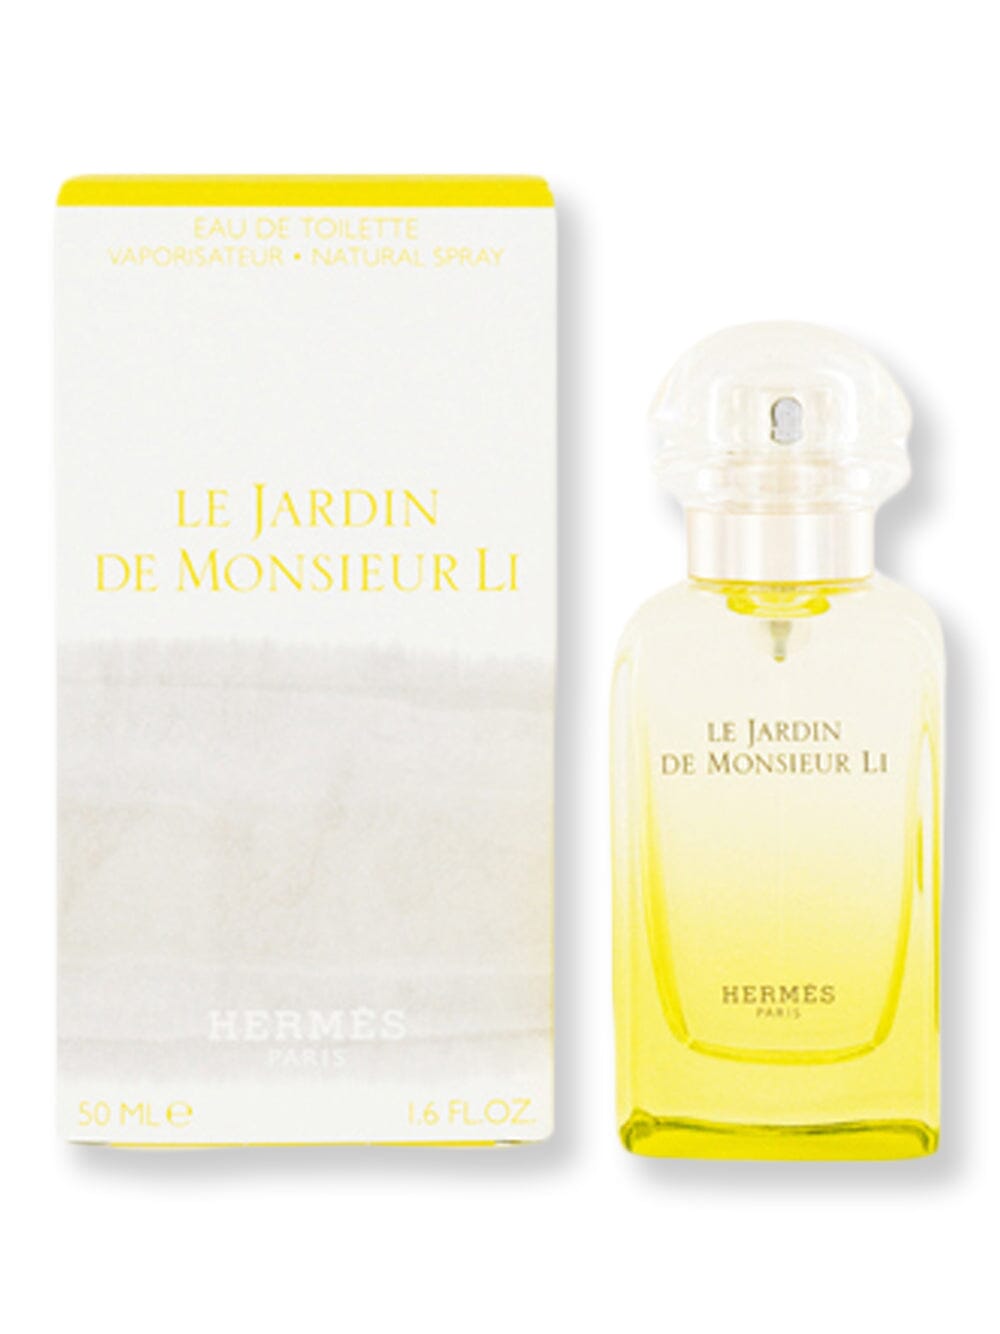 Hermes Hermes Le Jardin De Monsieur Li EDT Spray 1.6 oz50 ml Perfume 